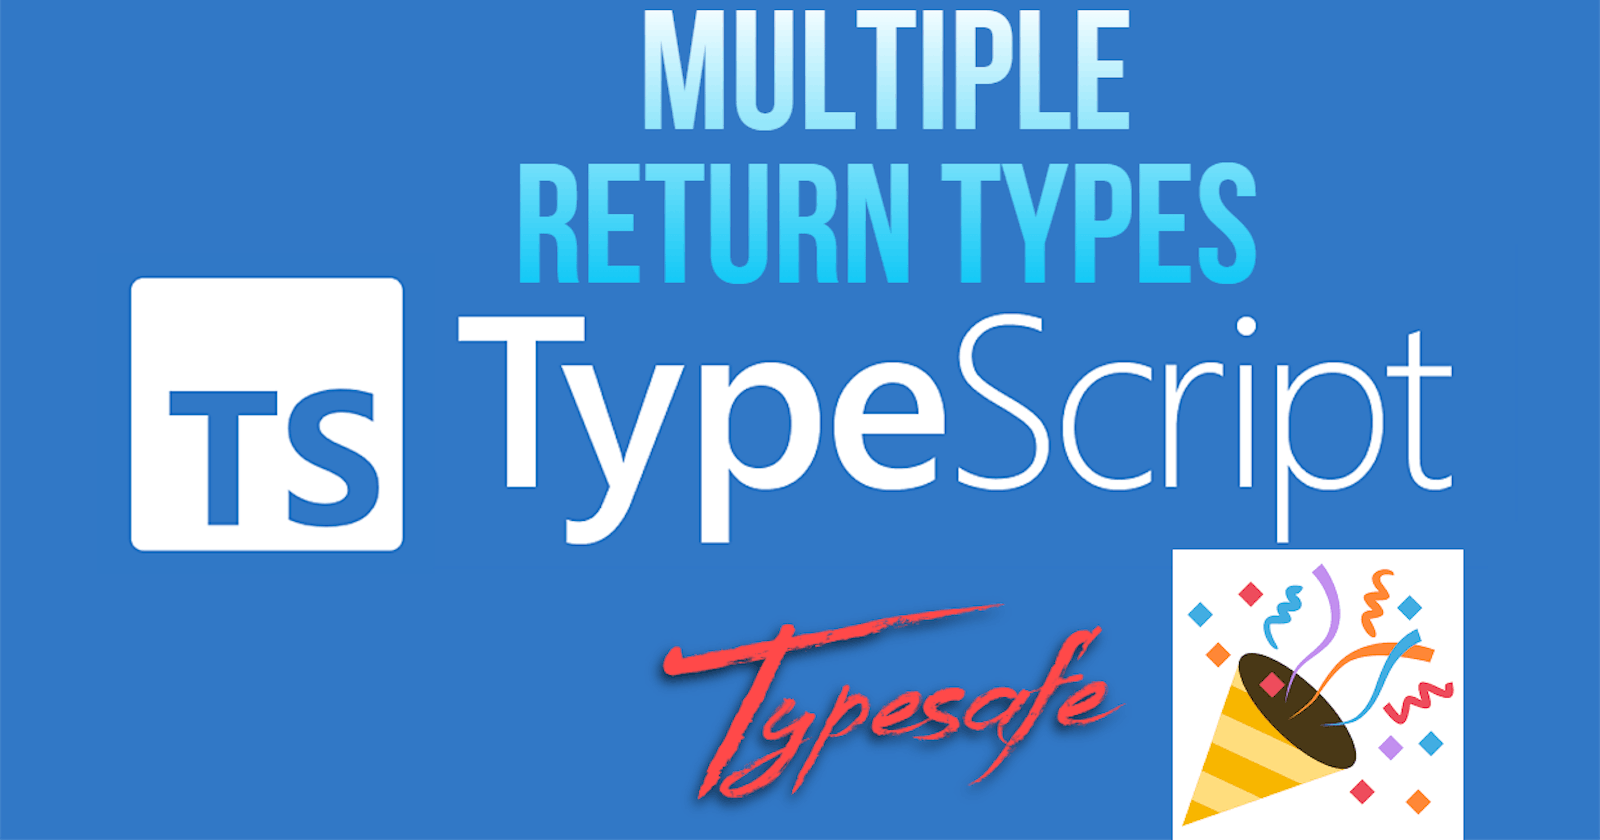 Typesafe multiple return types with Typescript